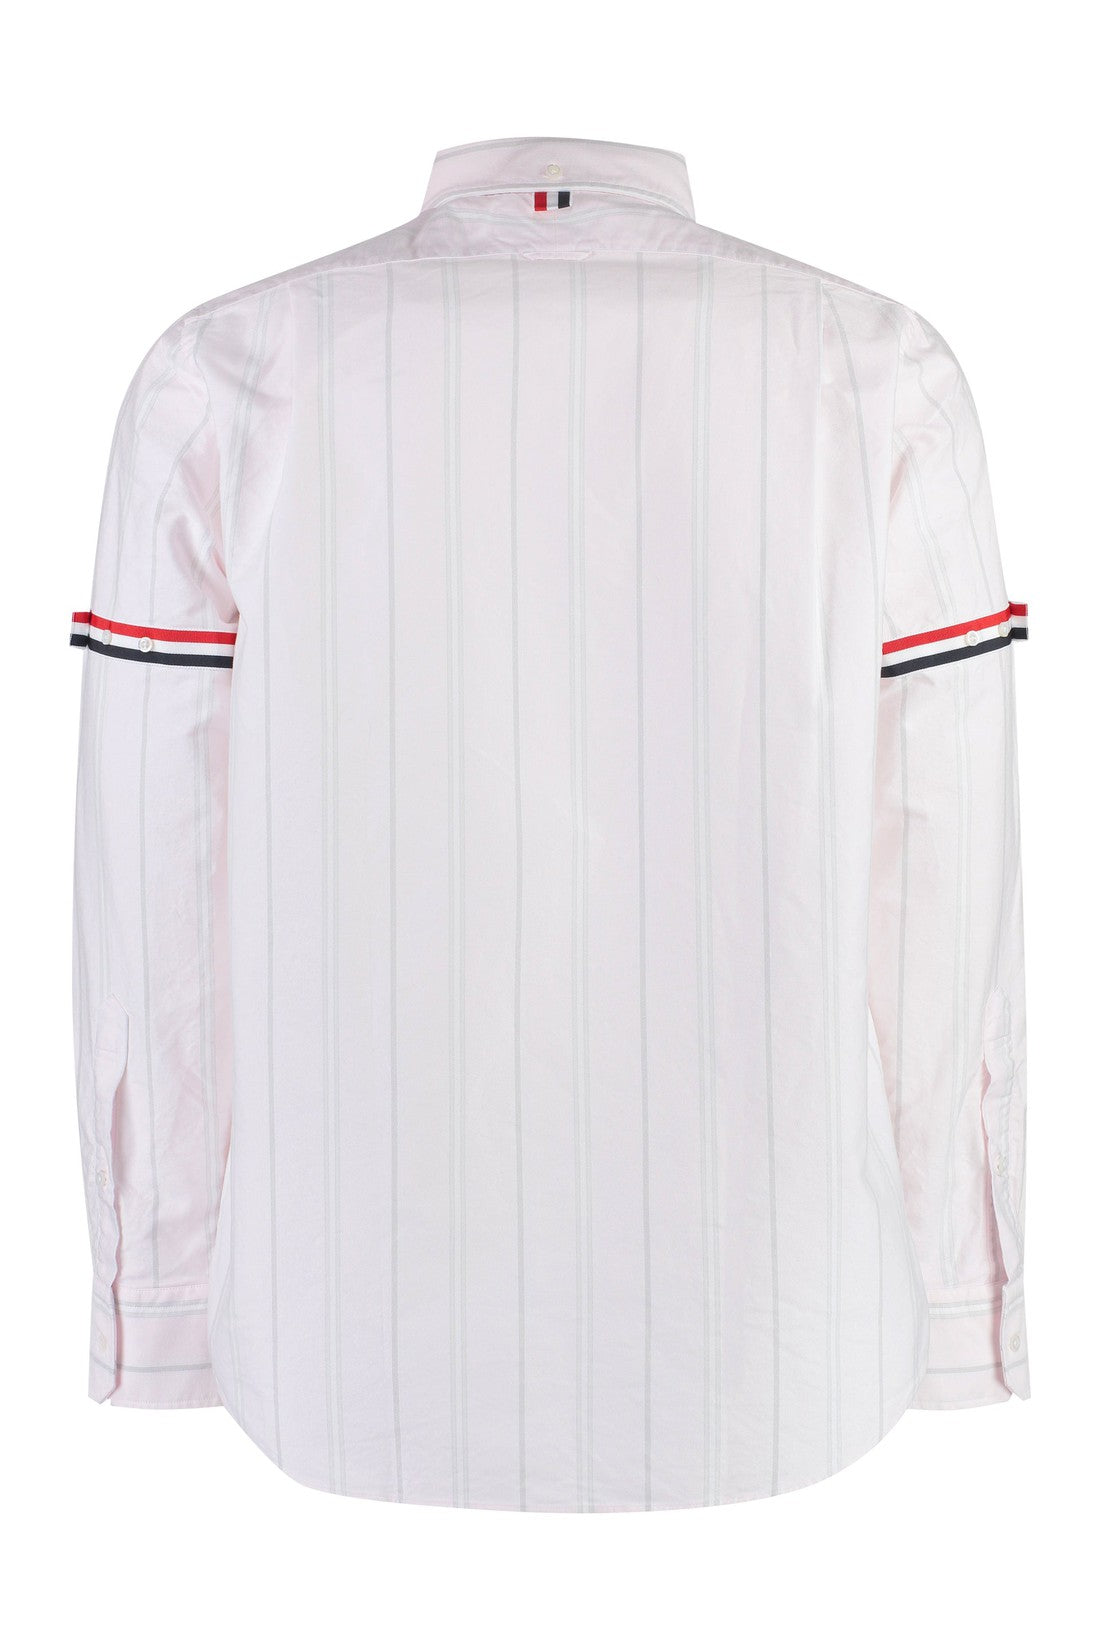 Thom Browne-OUTLET-SALE-Striped cotton shirt-ARCHIVIST